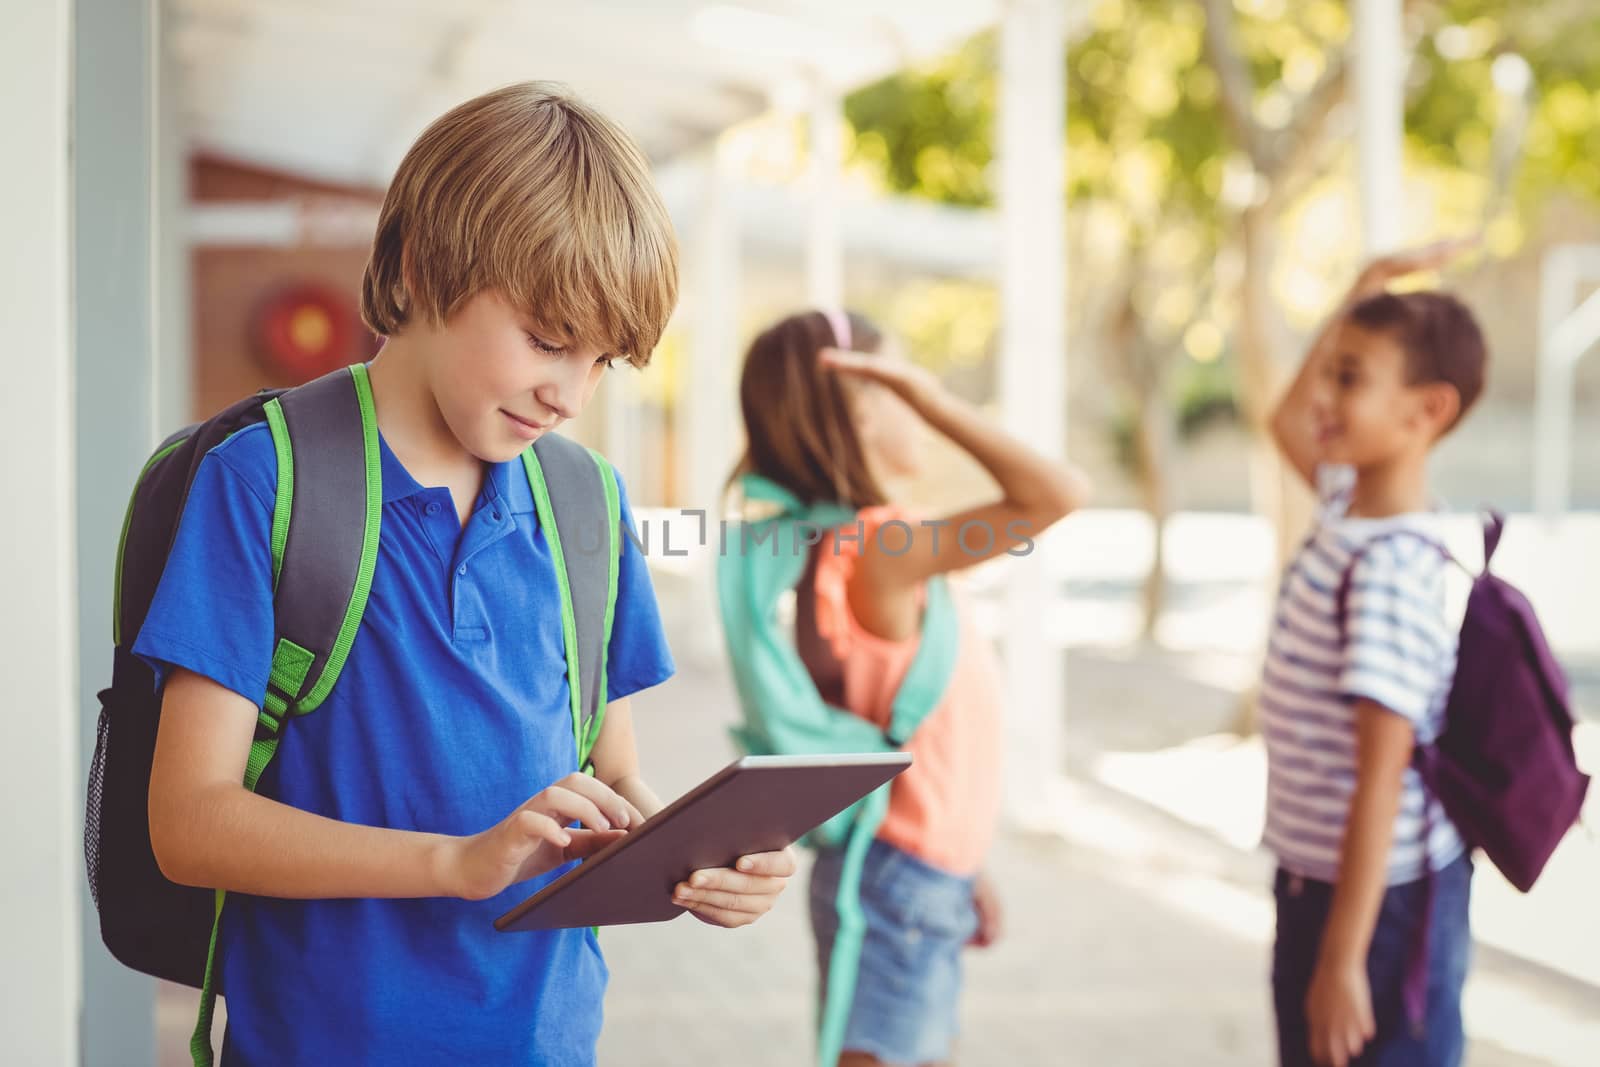 Schoolboy using digital tablet in school corridor by Wavebreakmedia